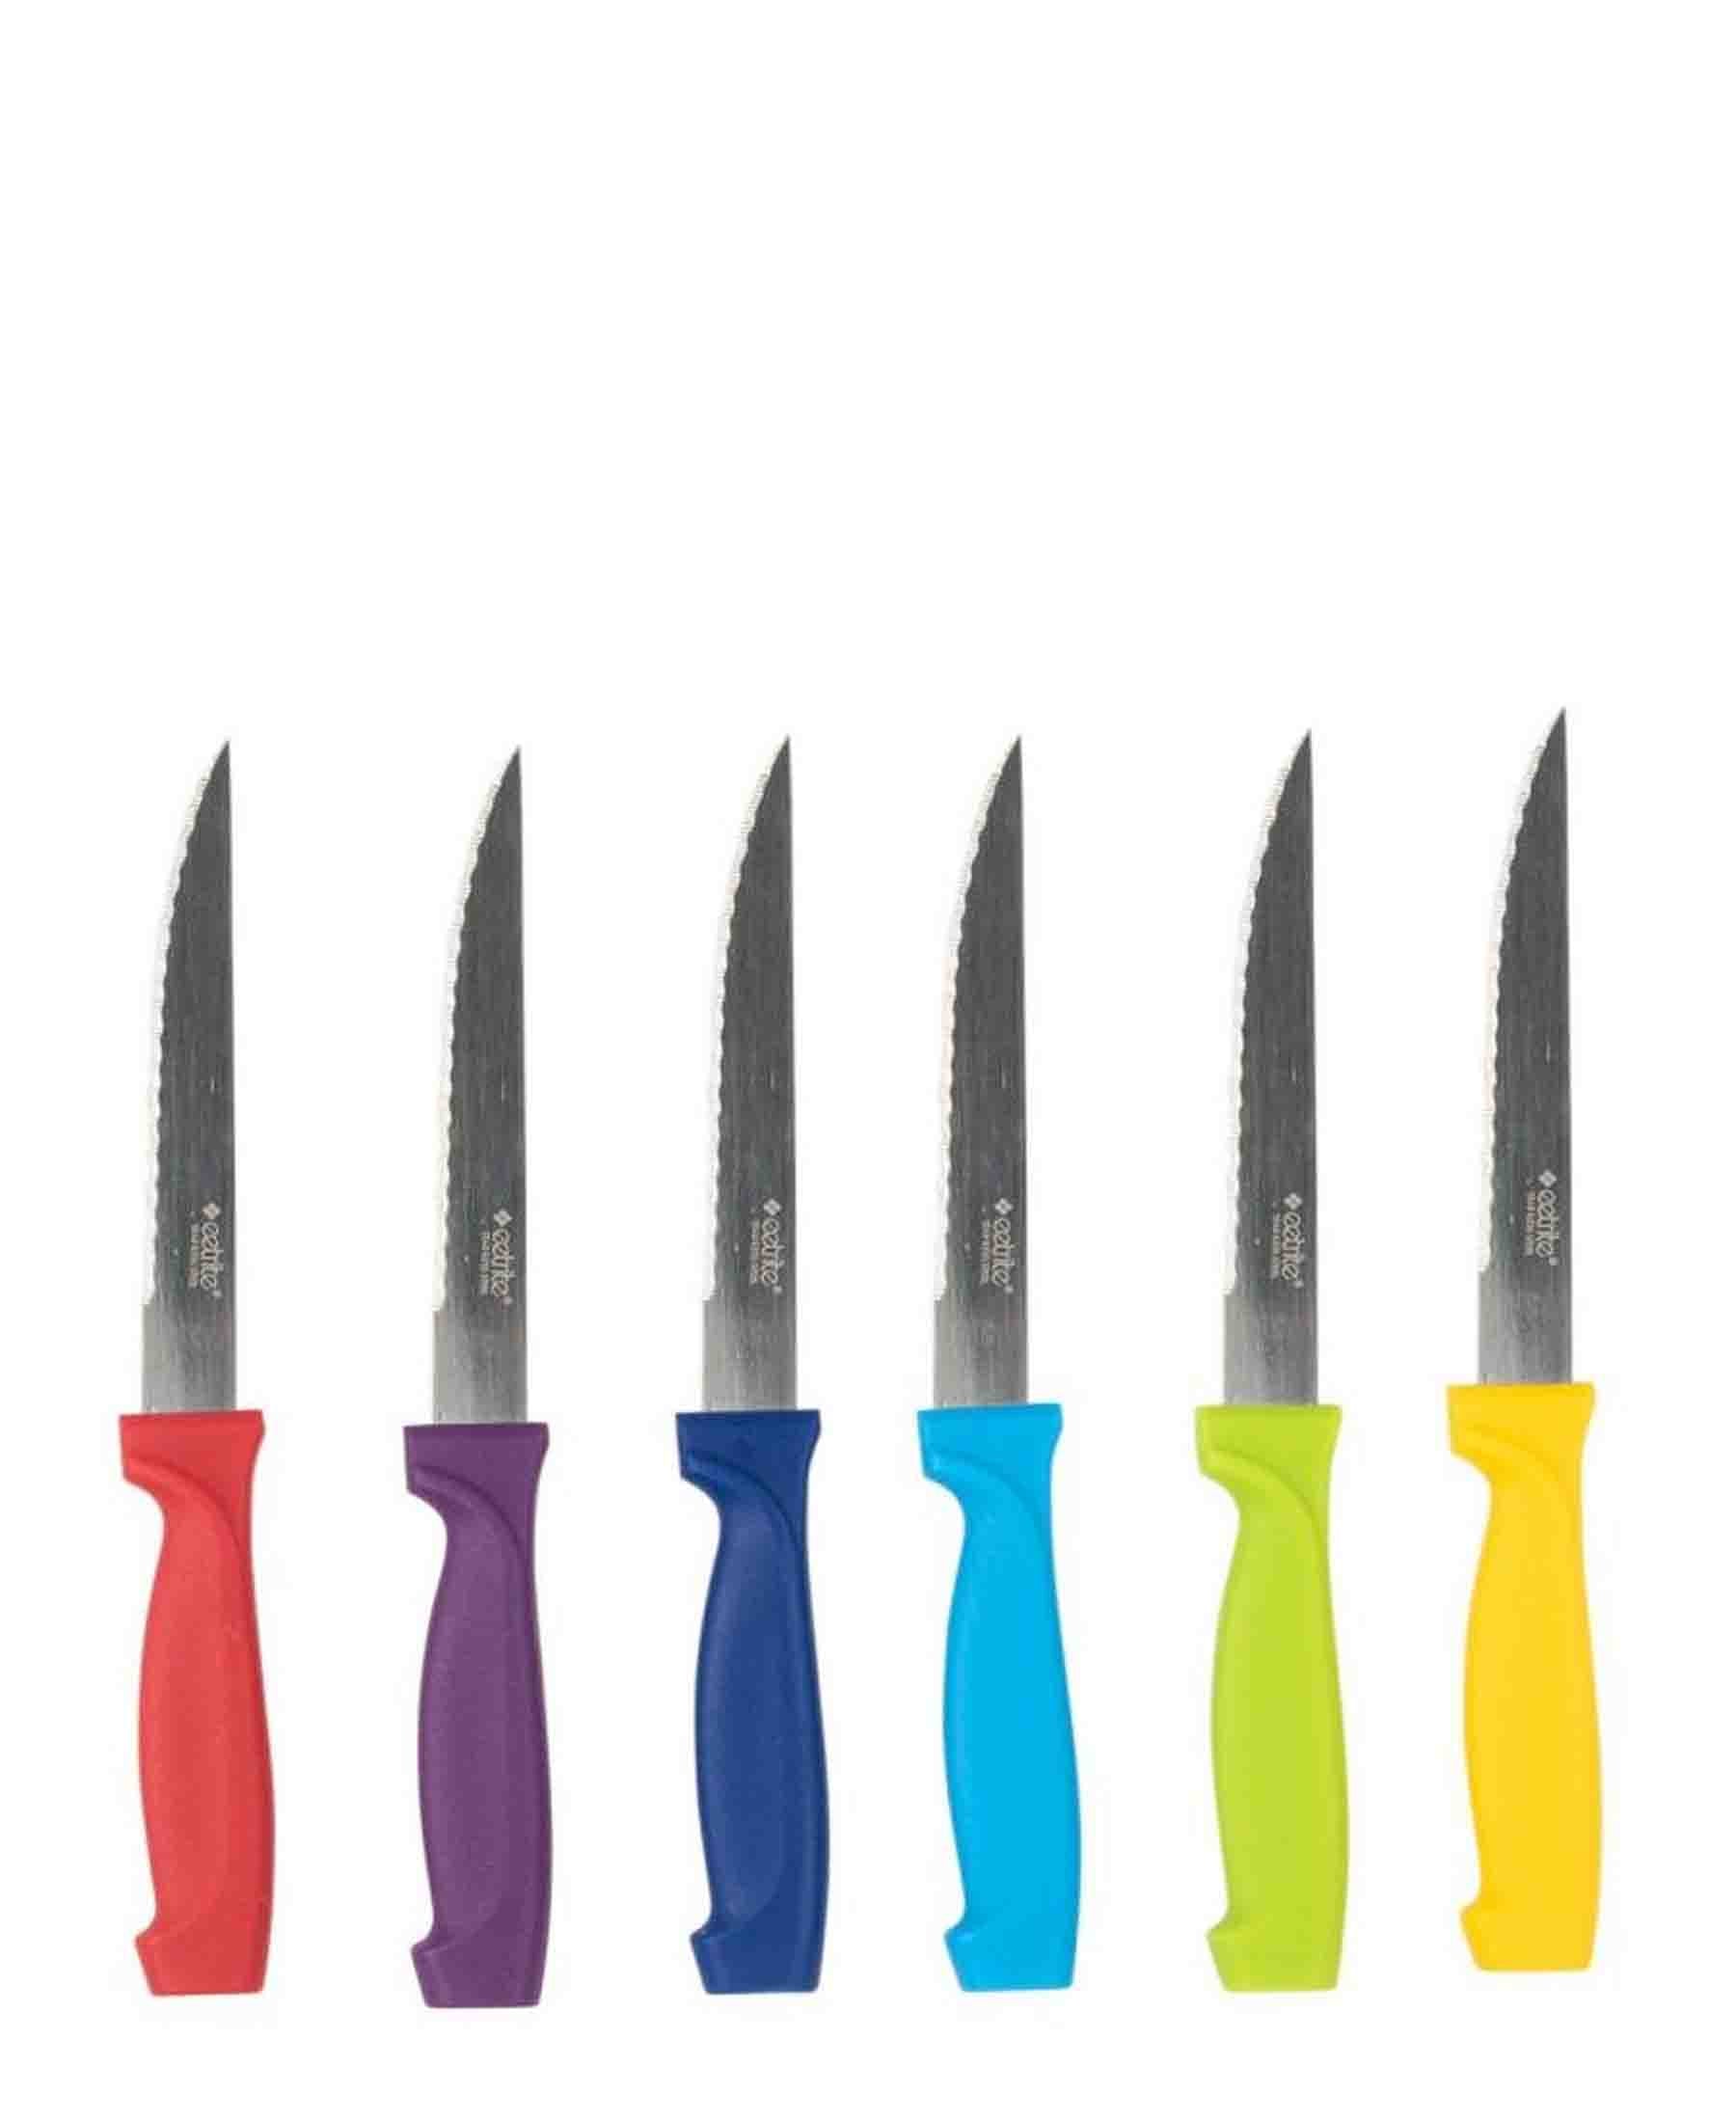 Eetrite 6 Piece Utility Knife Set - Assorted